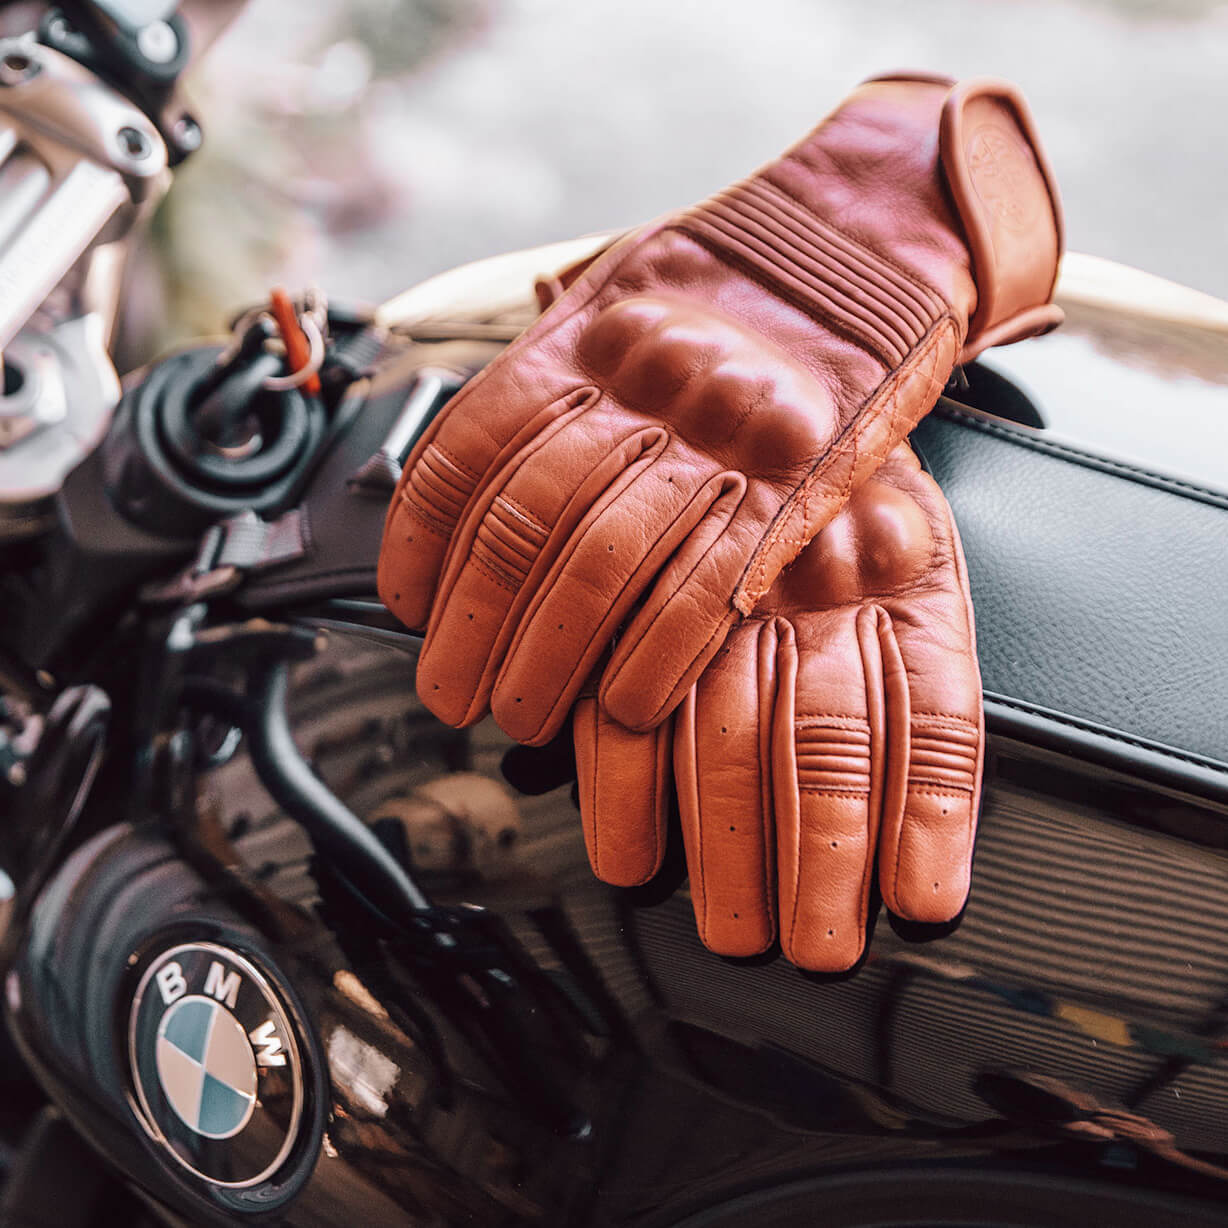 Black Arrow Moto | Queen Bee Gloves - Royal Purple - PRESALE - Gloves - Peak Moto